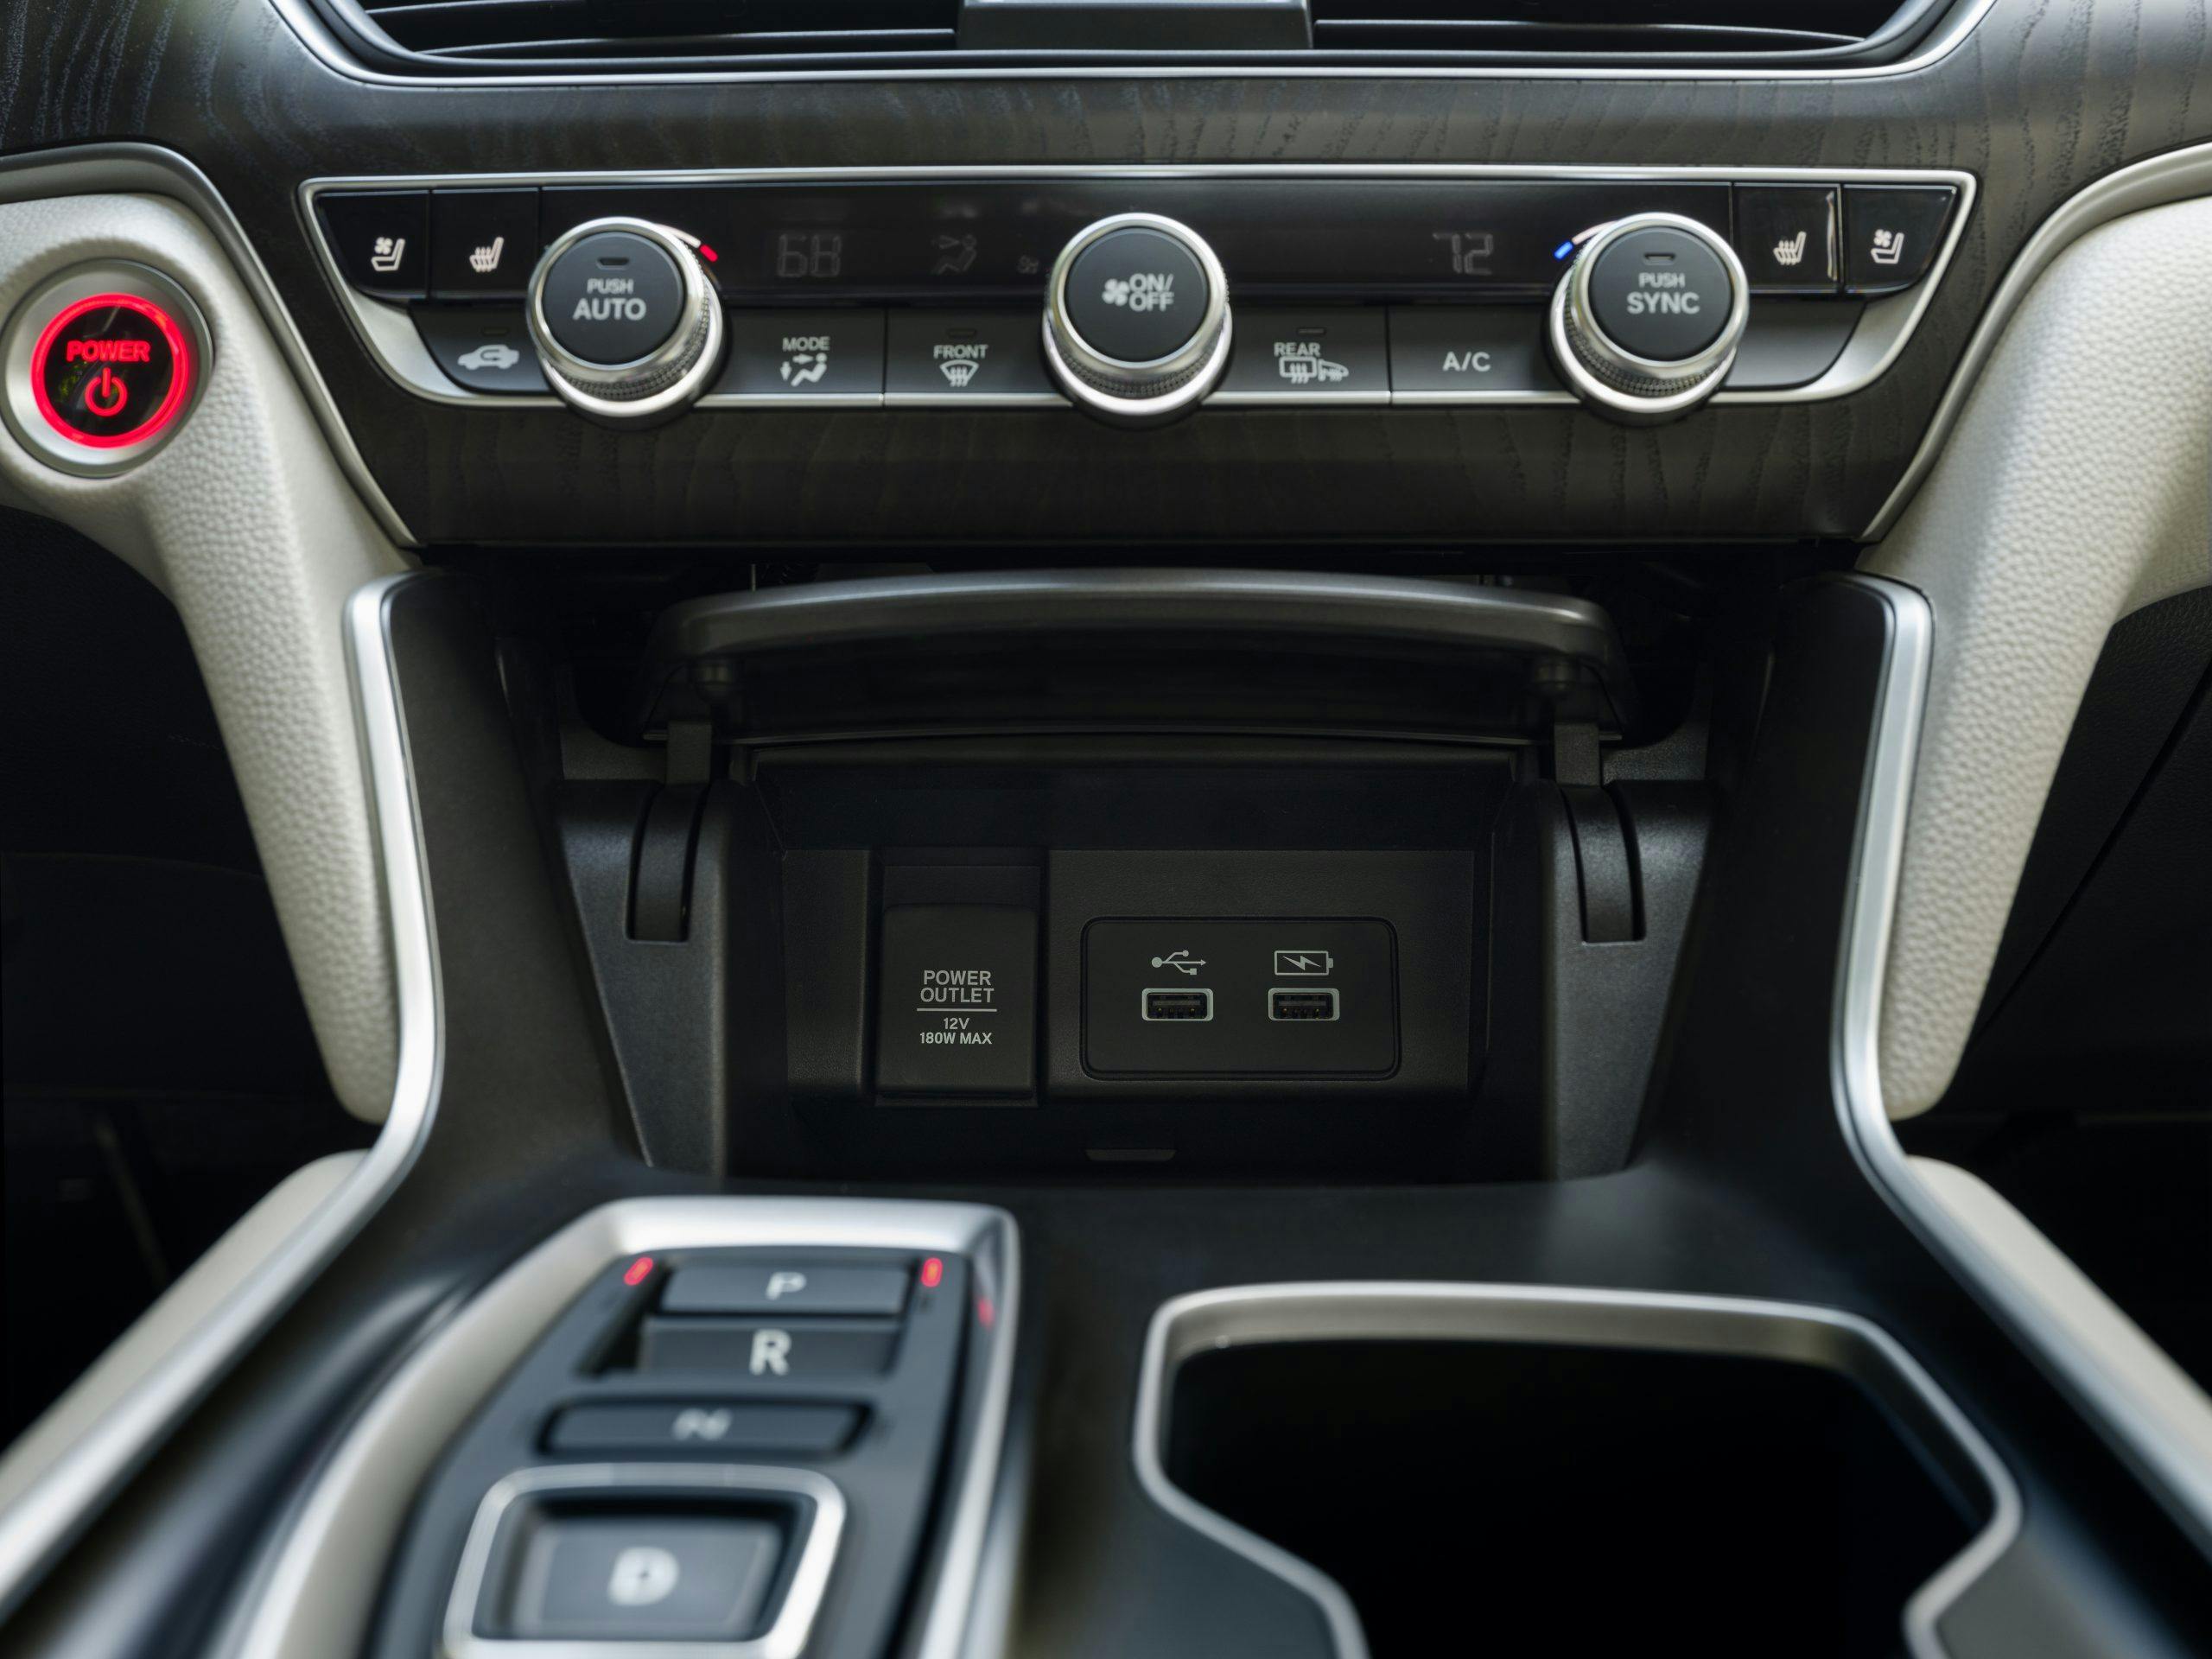 Honda Accord Hybrid console options